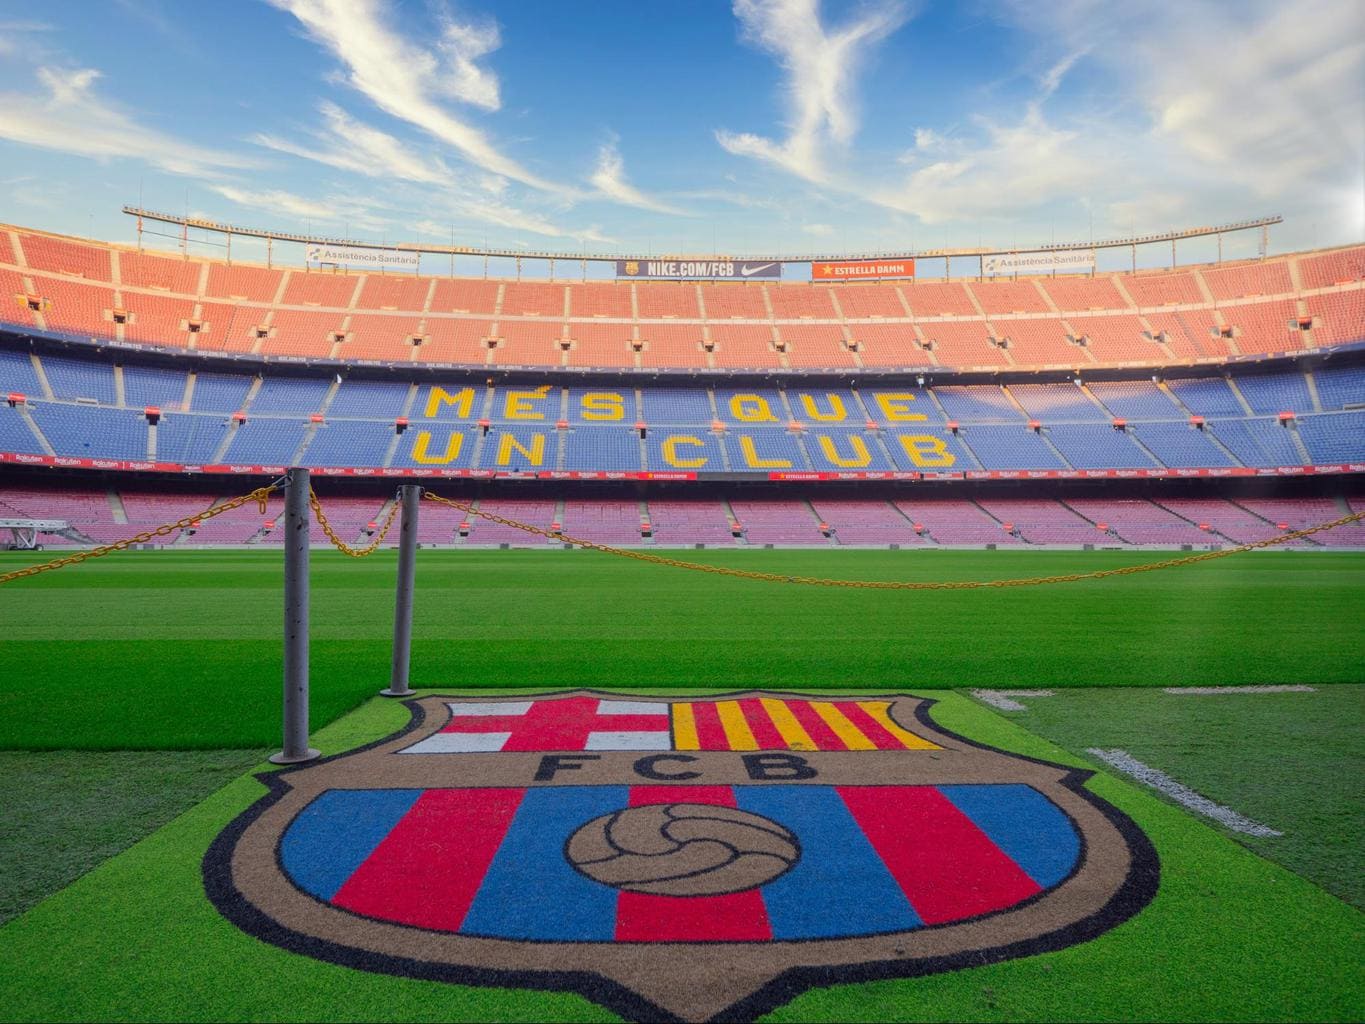 Camp Nou badge and stadium